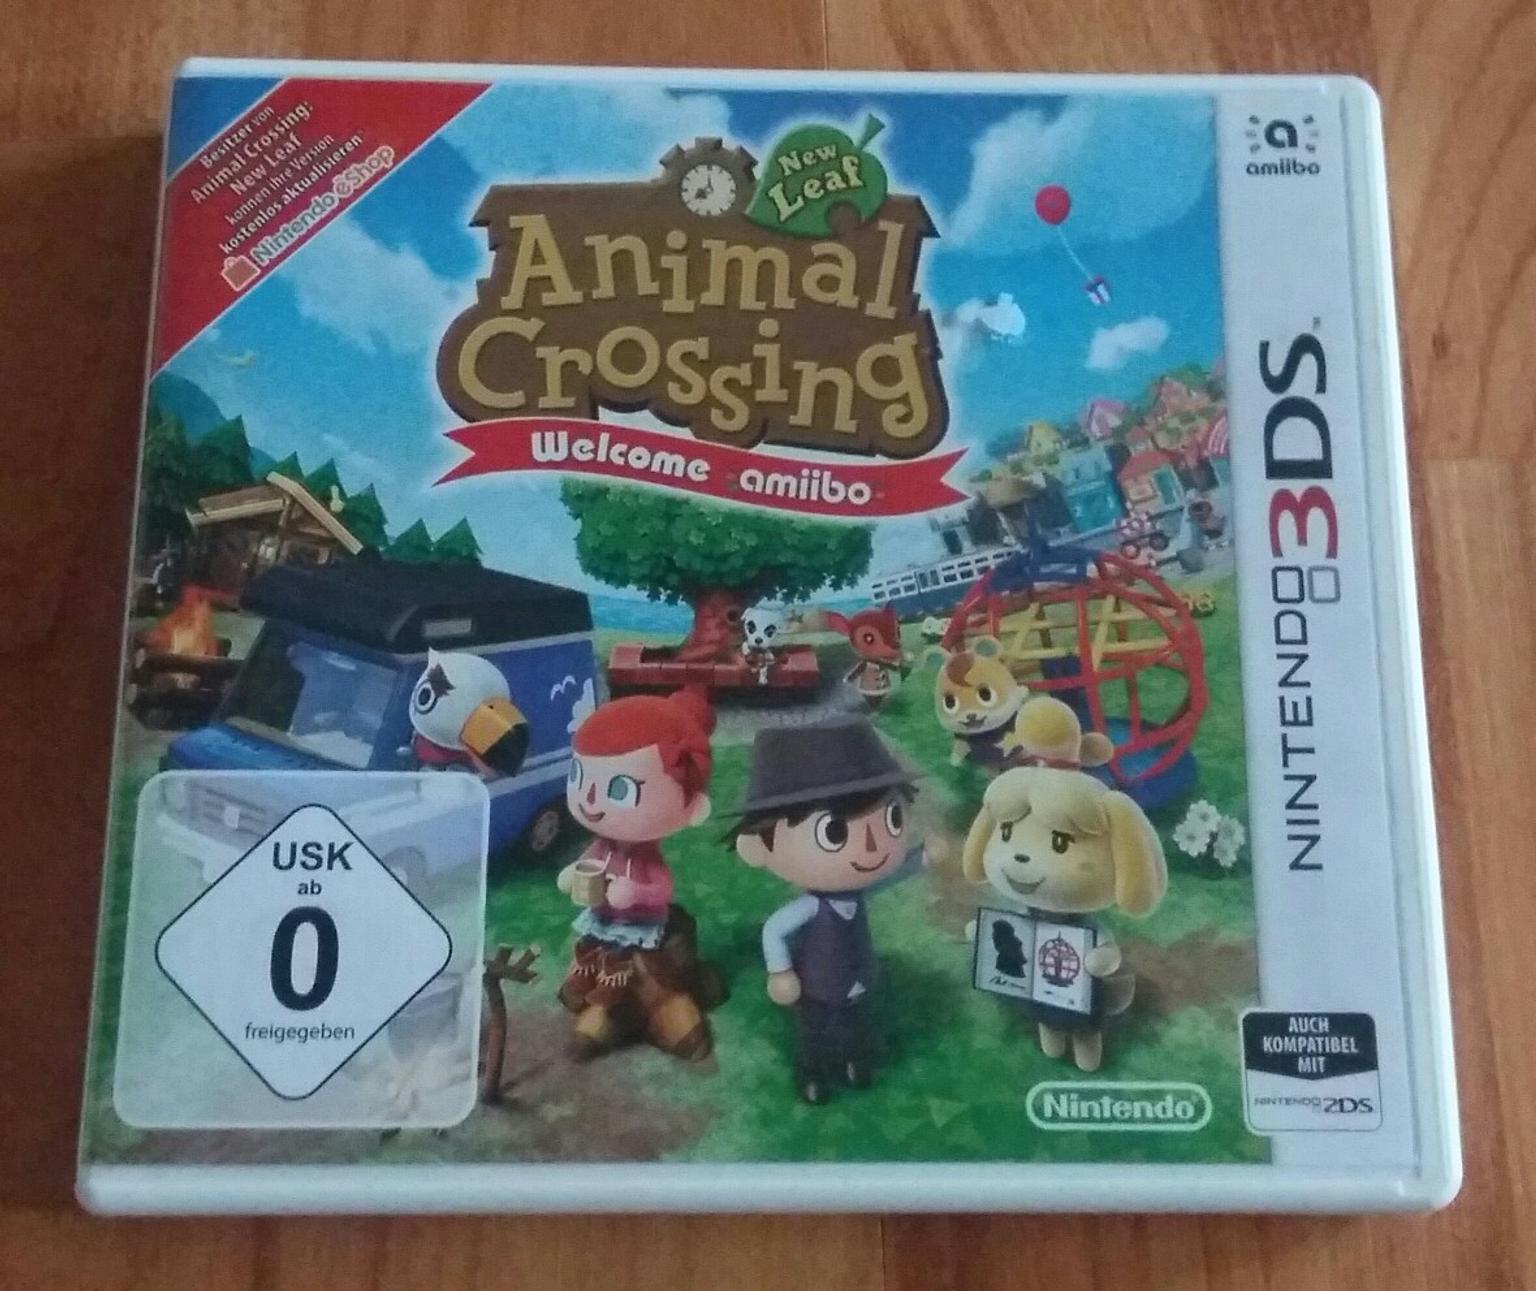 Nintendo 3ds Spiel Animal Crossing New Leaf In Kalbe Milde For 28 00 For Sale Shpock